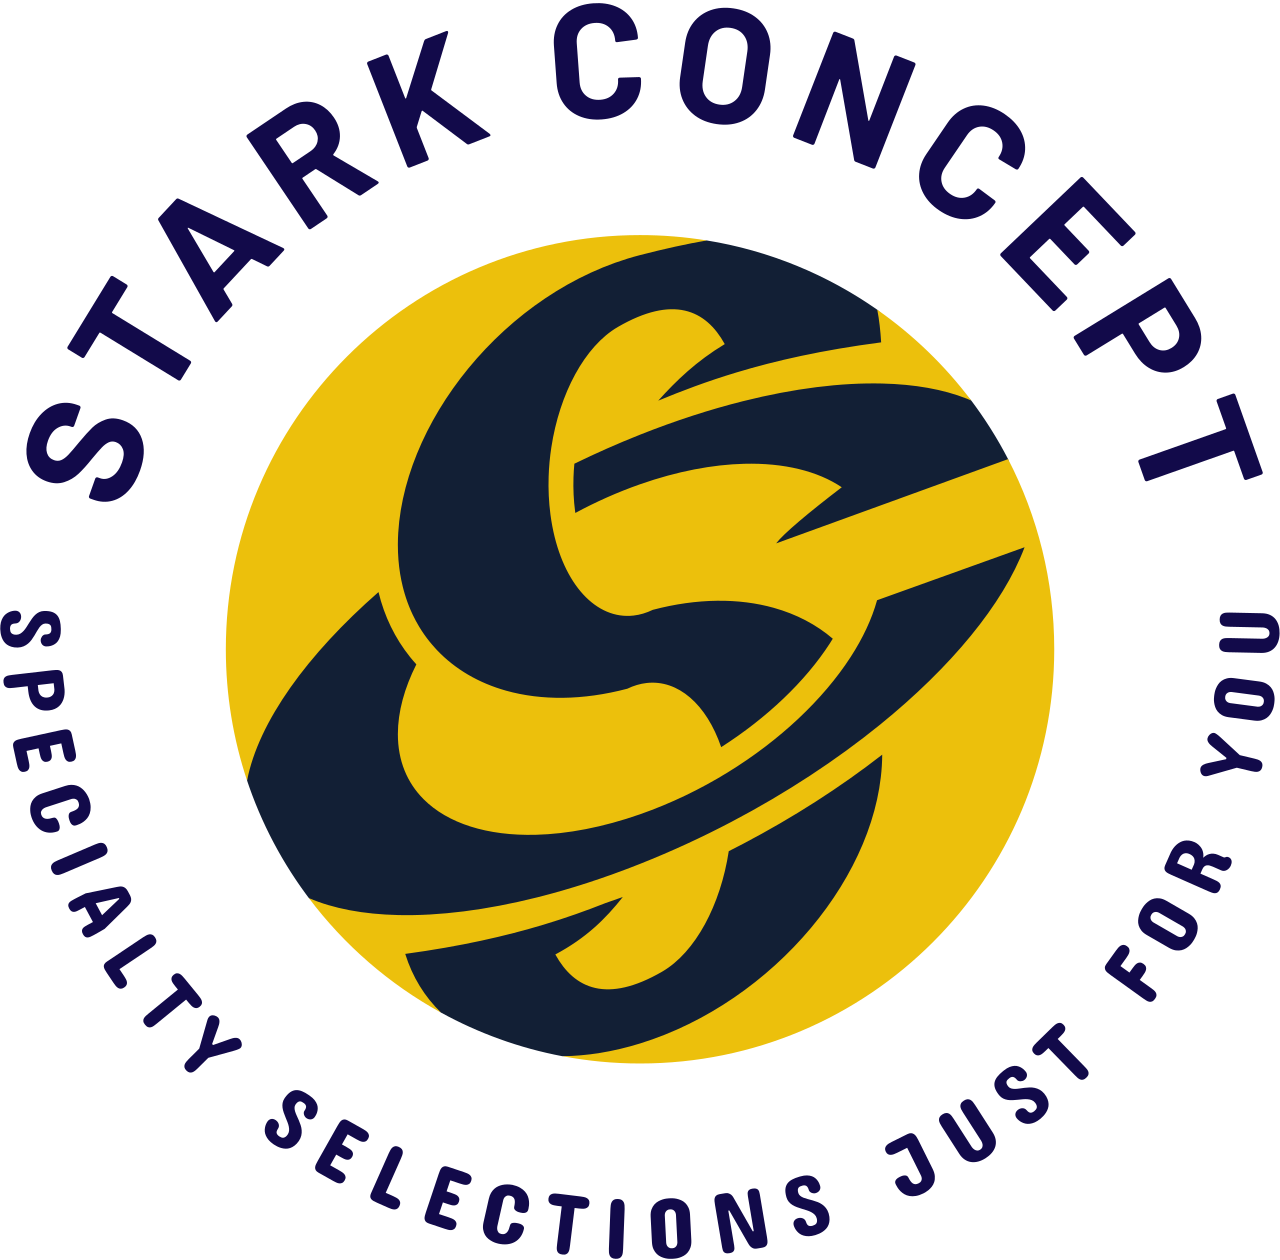 STARK CONCEPT's logo